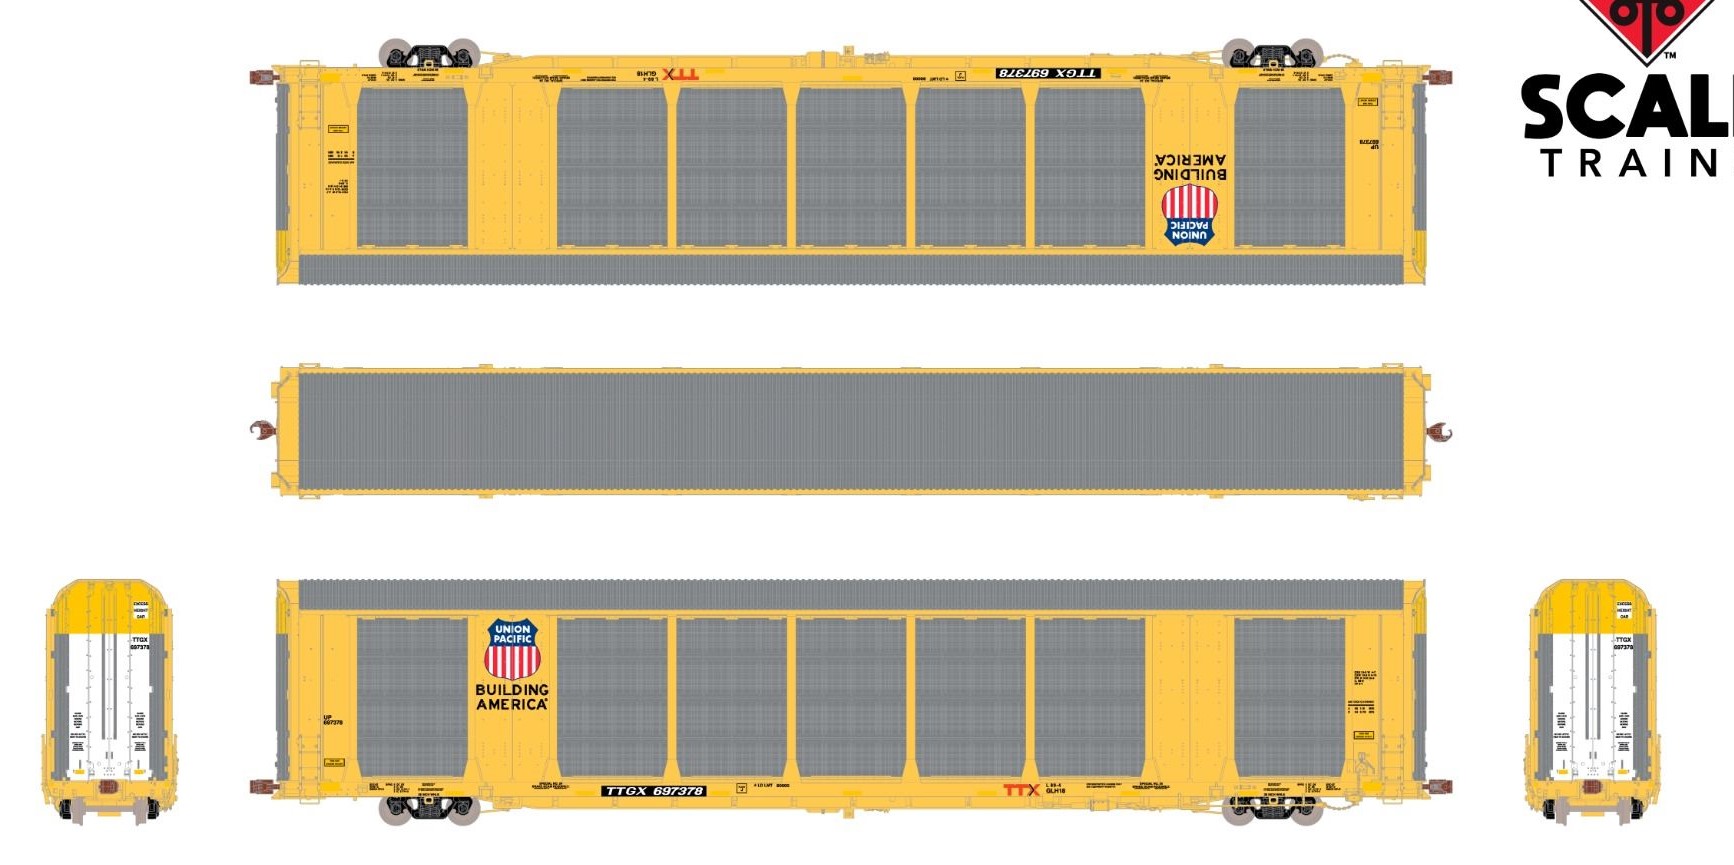 ScaleTrains Operator HO SXT11581 Gunderson Multi-Max Autorack Union Pacific 'Building America' TTGX #697414